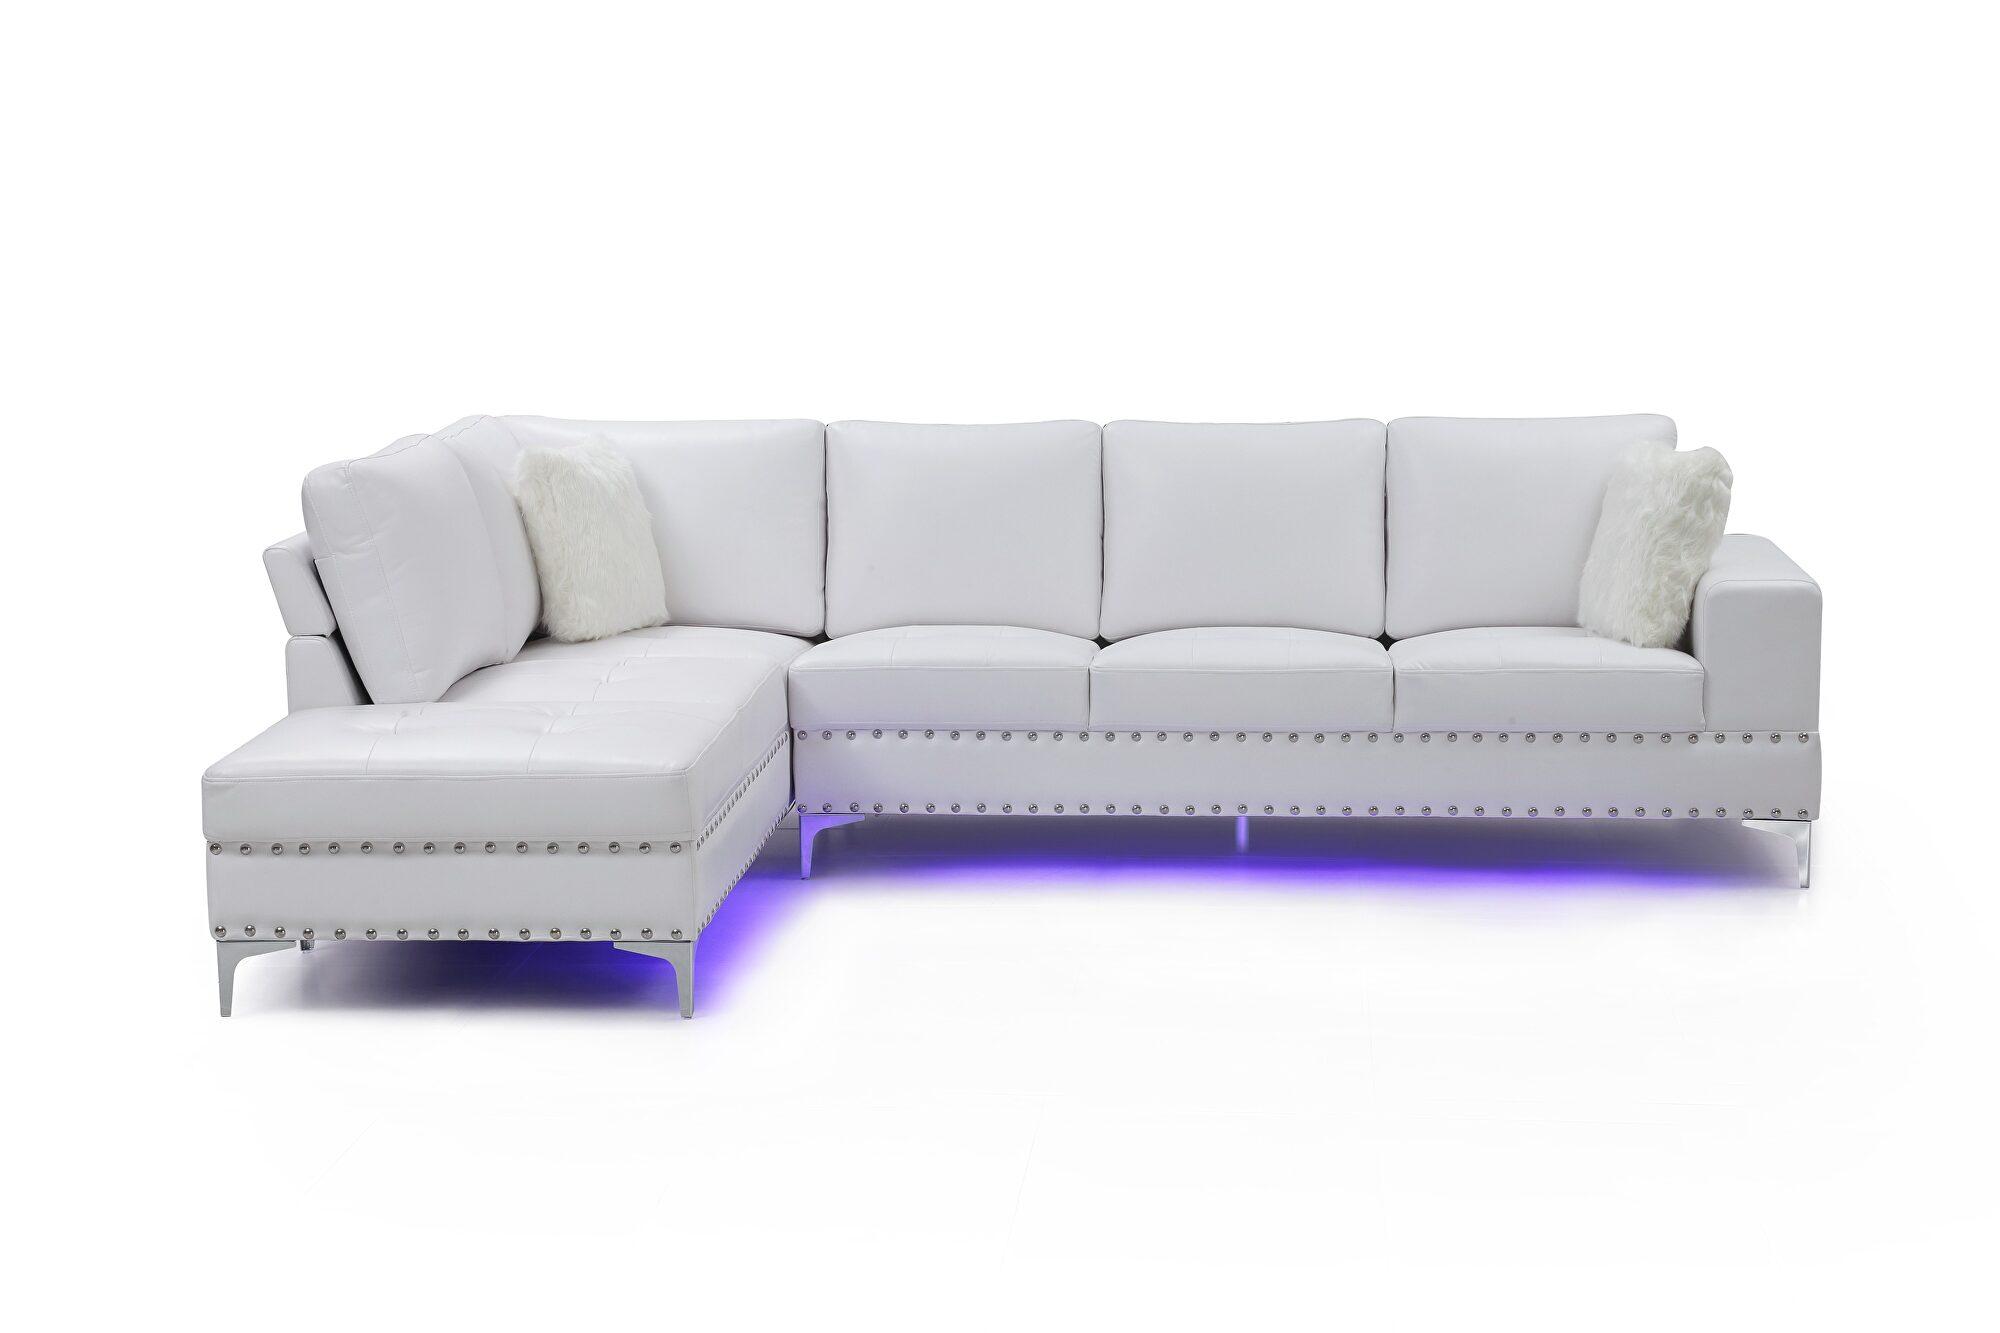 

    
U97 Contemporary White PU Sectional Sofa w/ LED & Storage Ottoman Global USA
